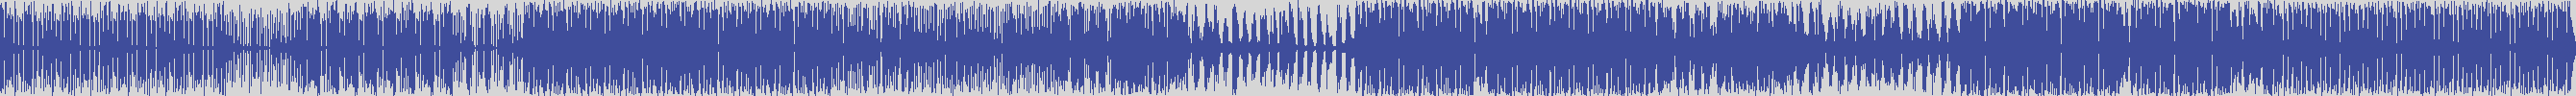 atomic_recordings [AR009] Max Esposito - The Star [Original Mix] audio wave form